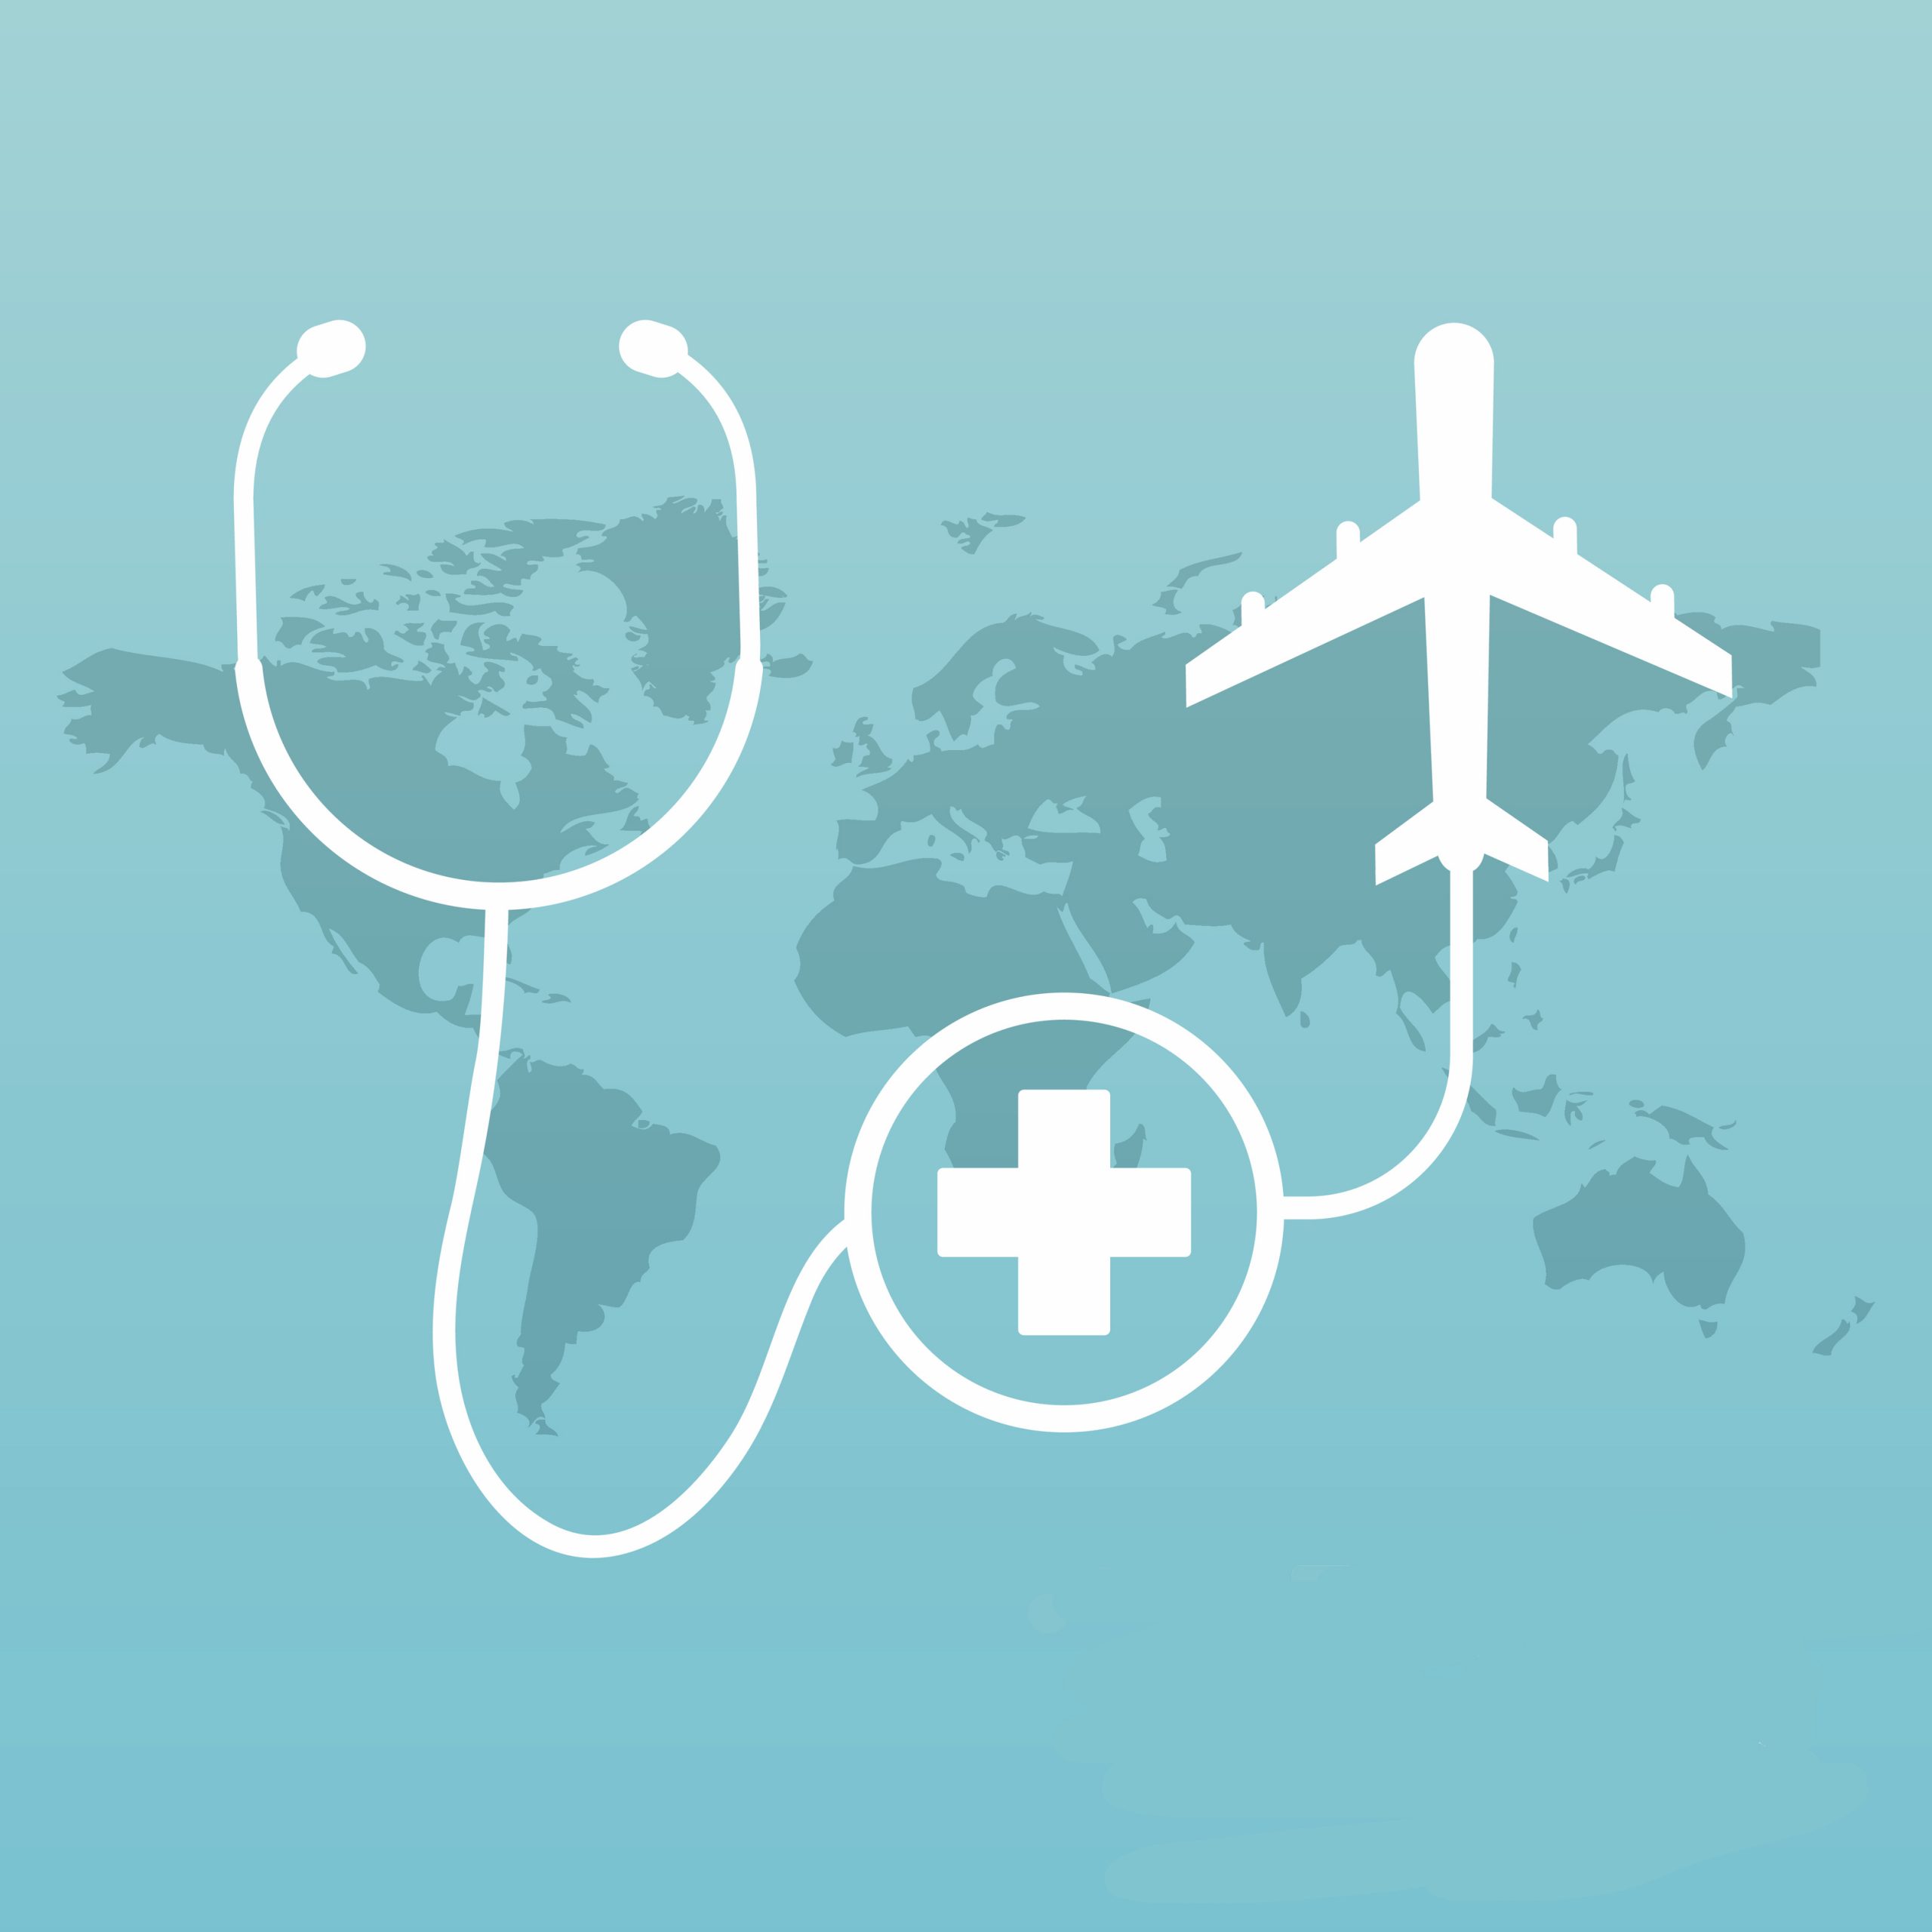 Medical tourism